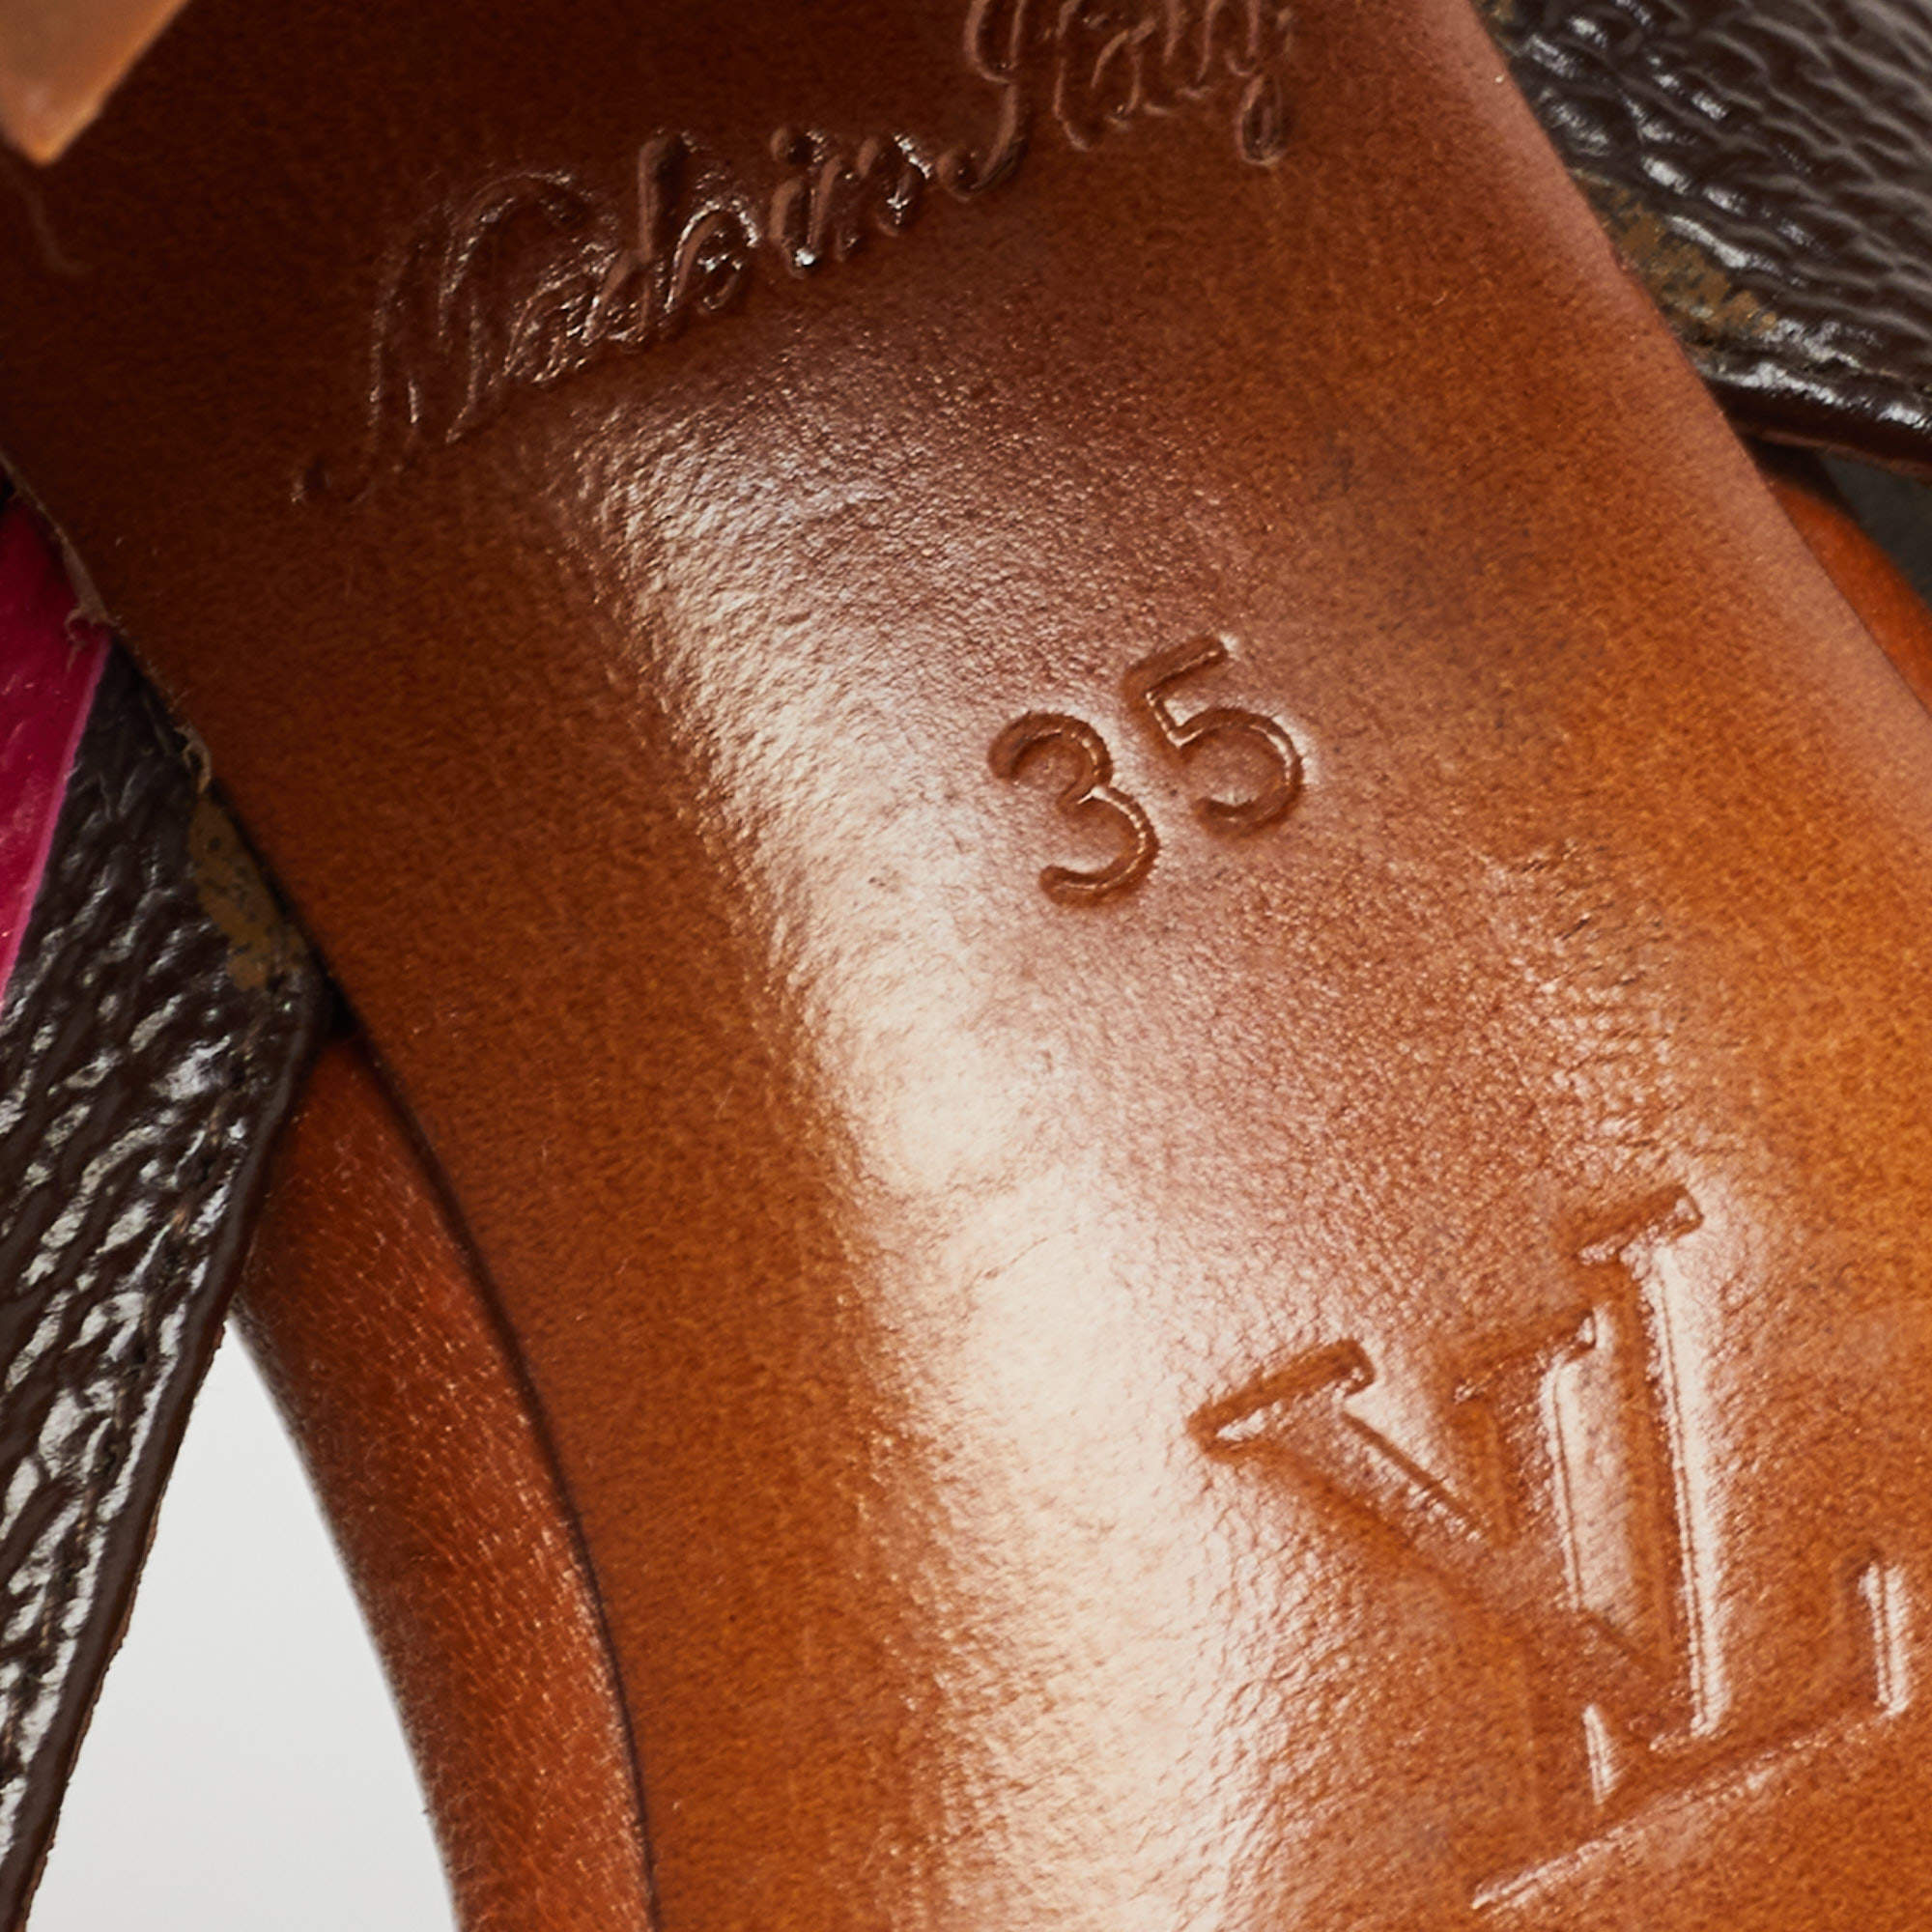 Louis Vuitton Brown/Pink Monogram Canvas Panorama Slide Sandals Size 35 Louis  Vuitton